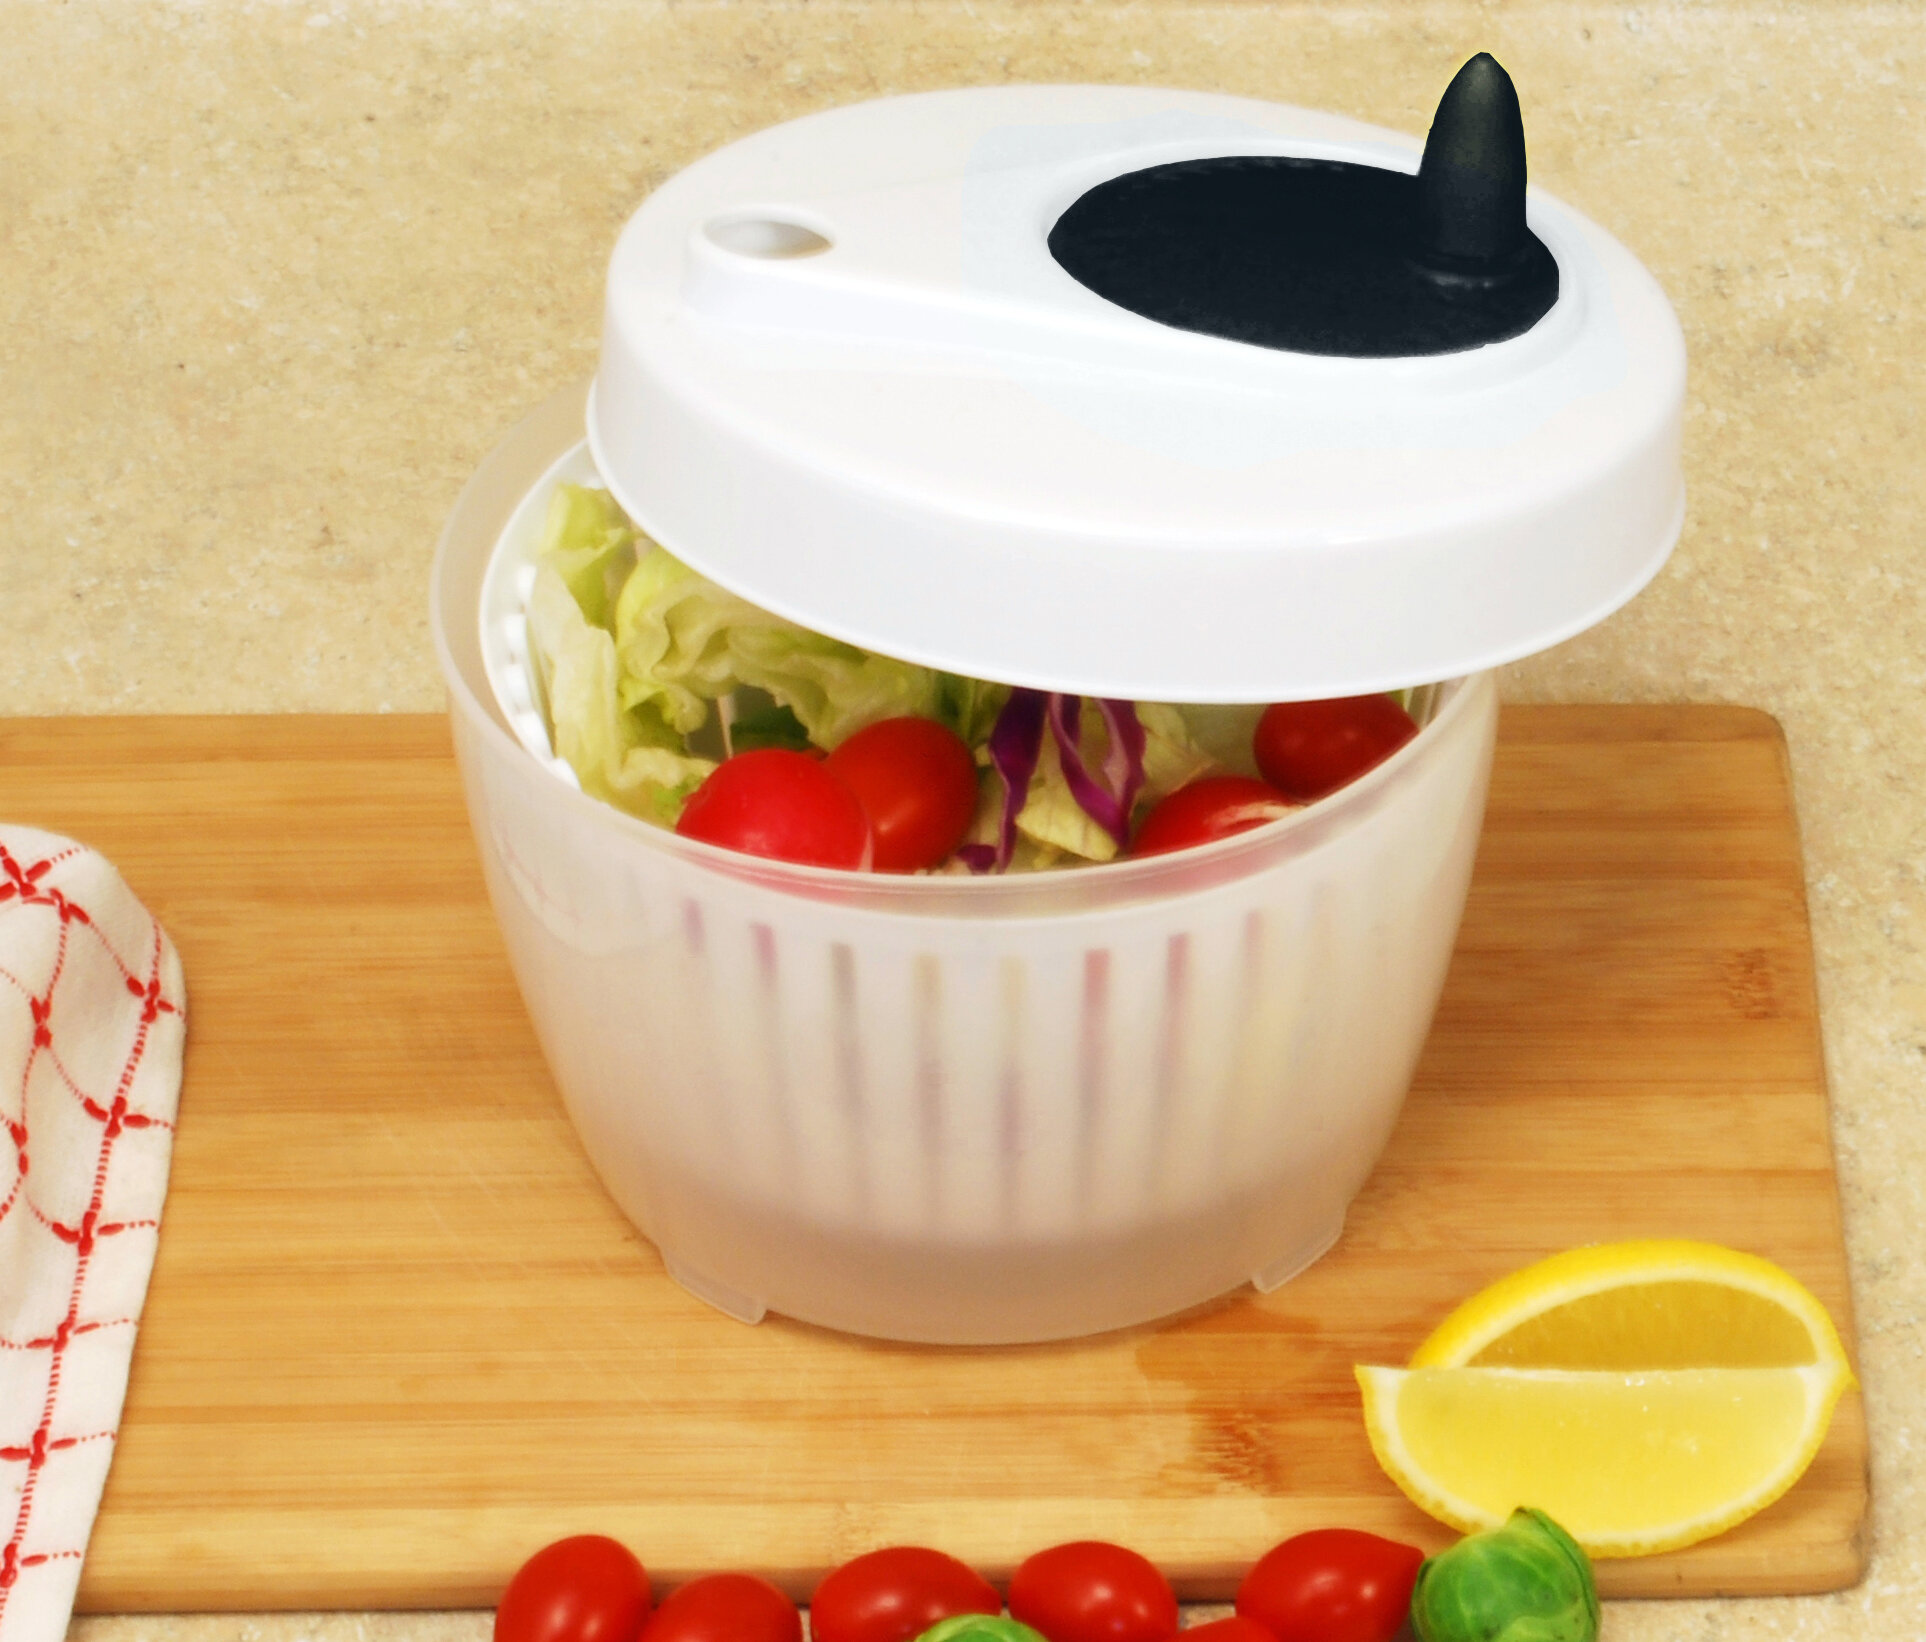 Single Serve Small Salad Spinner - Mini Prep Lettuce Spinner and